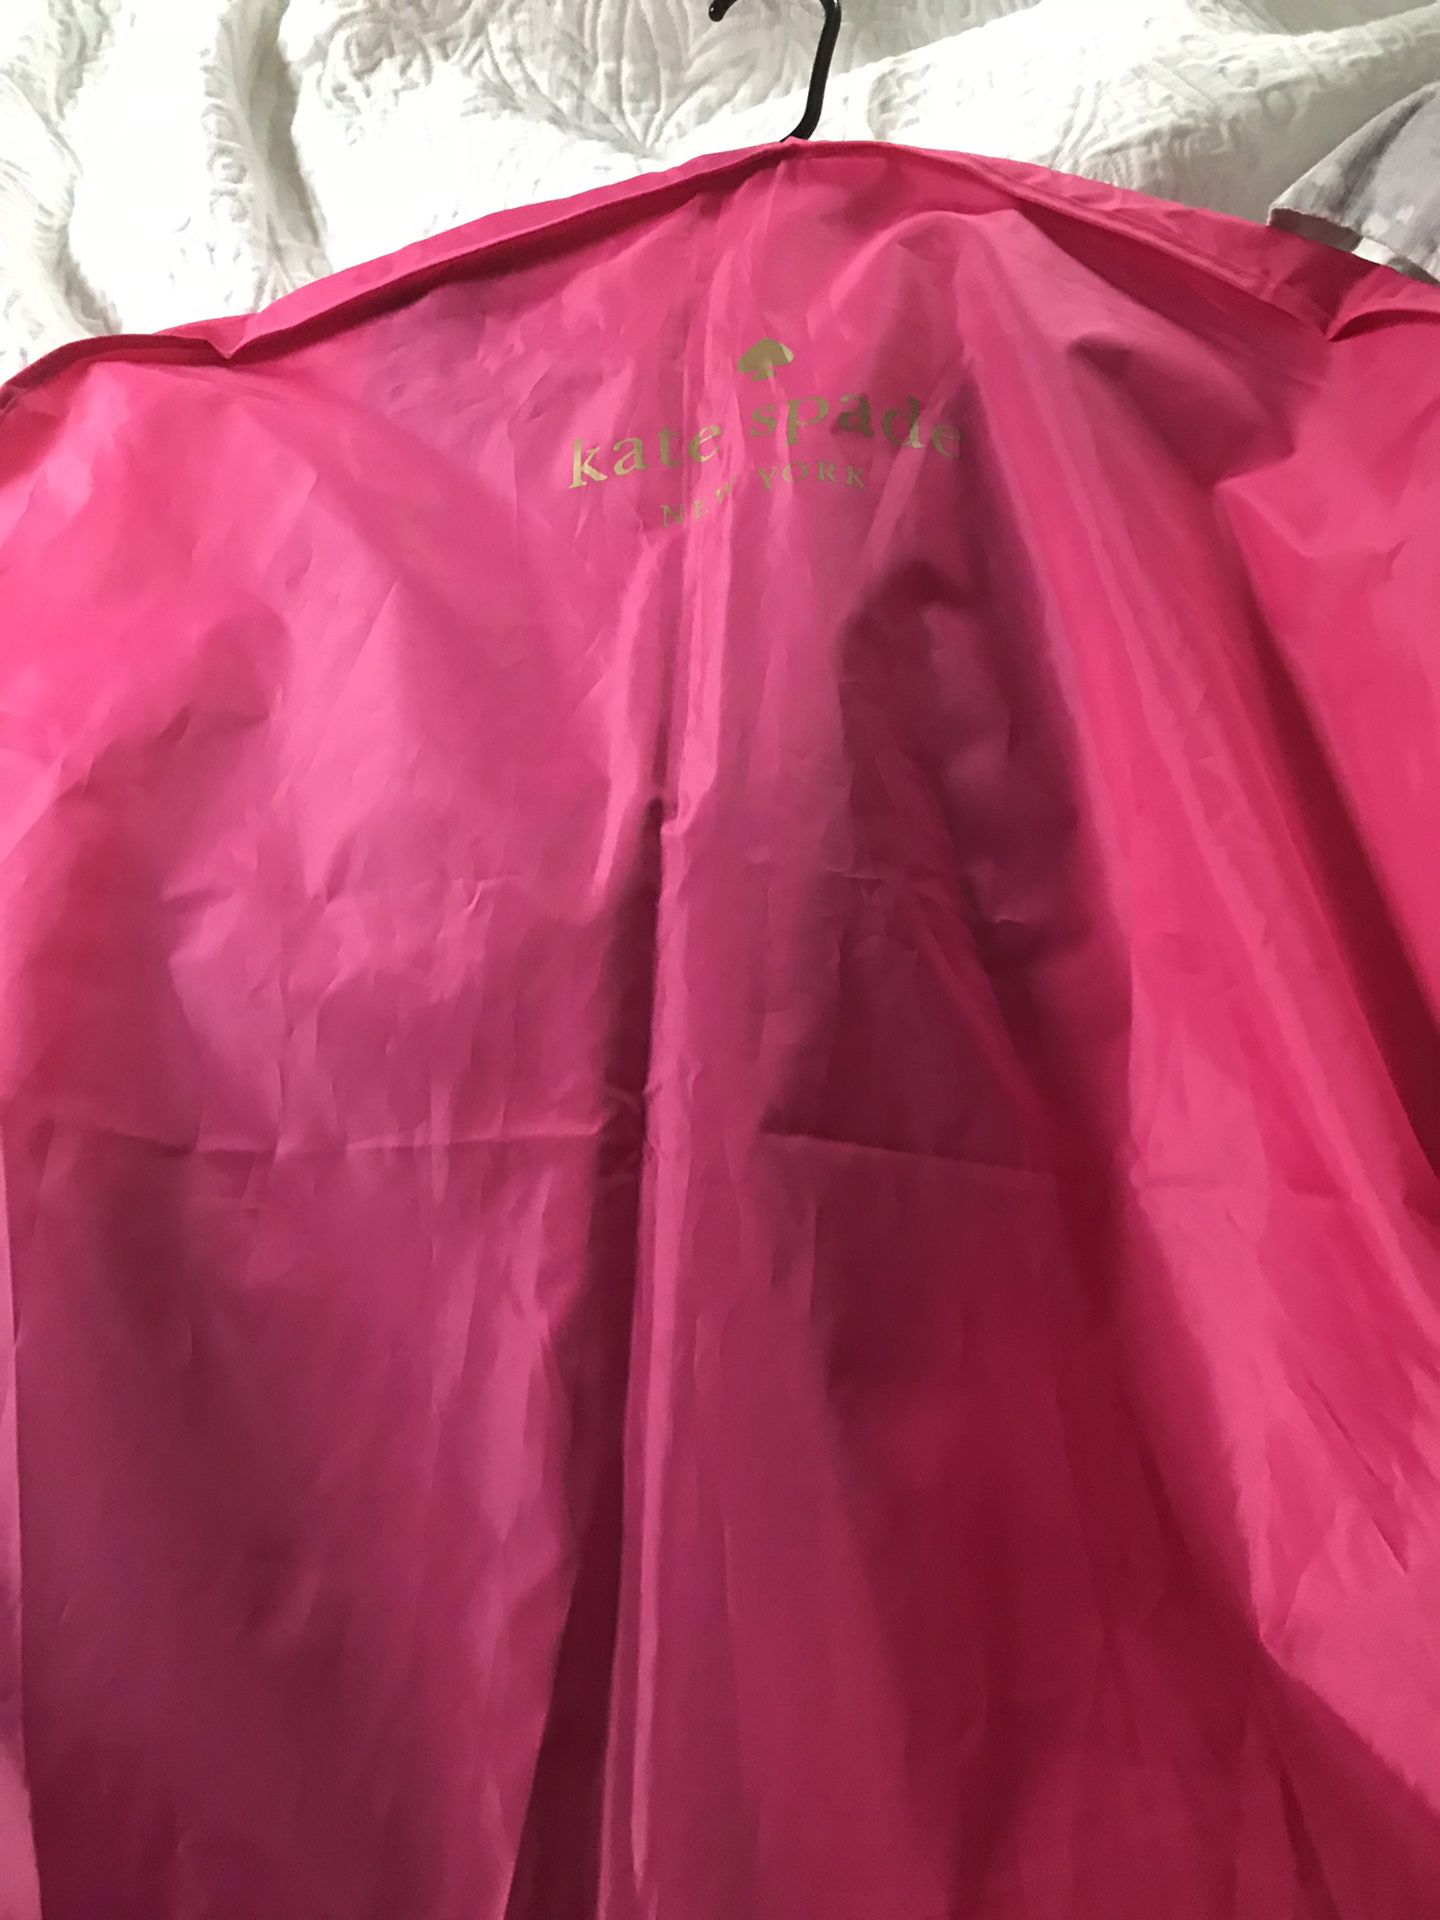 Kate Spade garment/dress bag